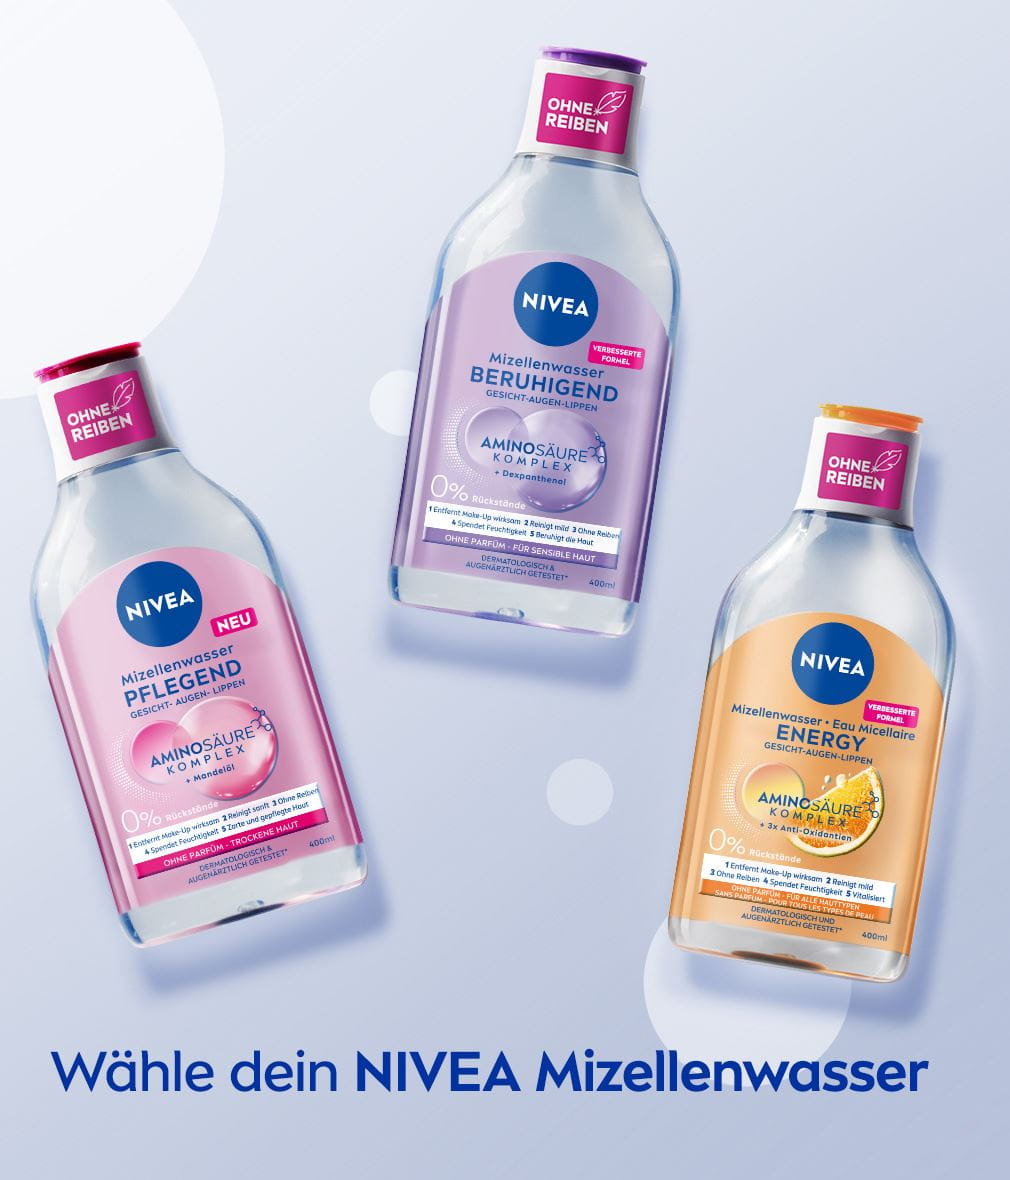 NIVEA Mizellenwasser Beruhigend 400 ml